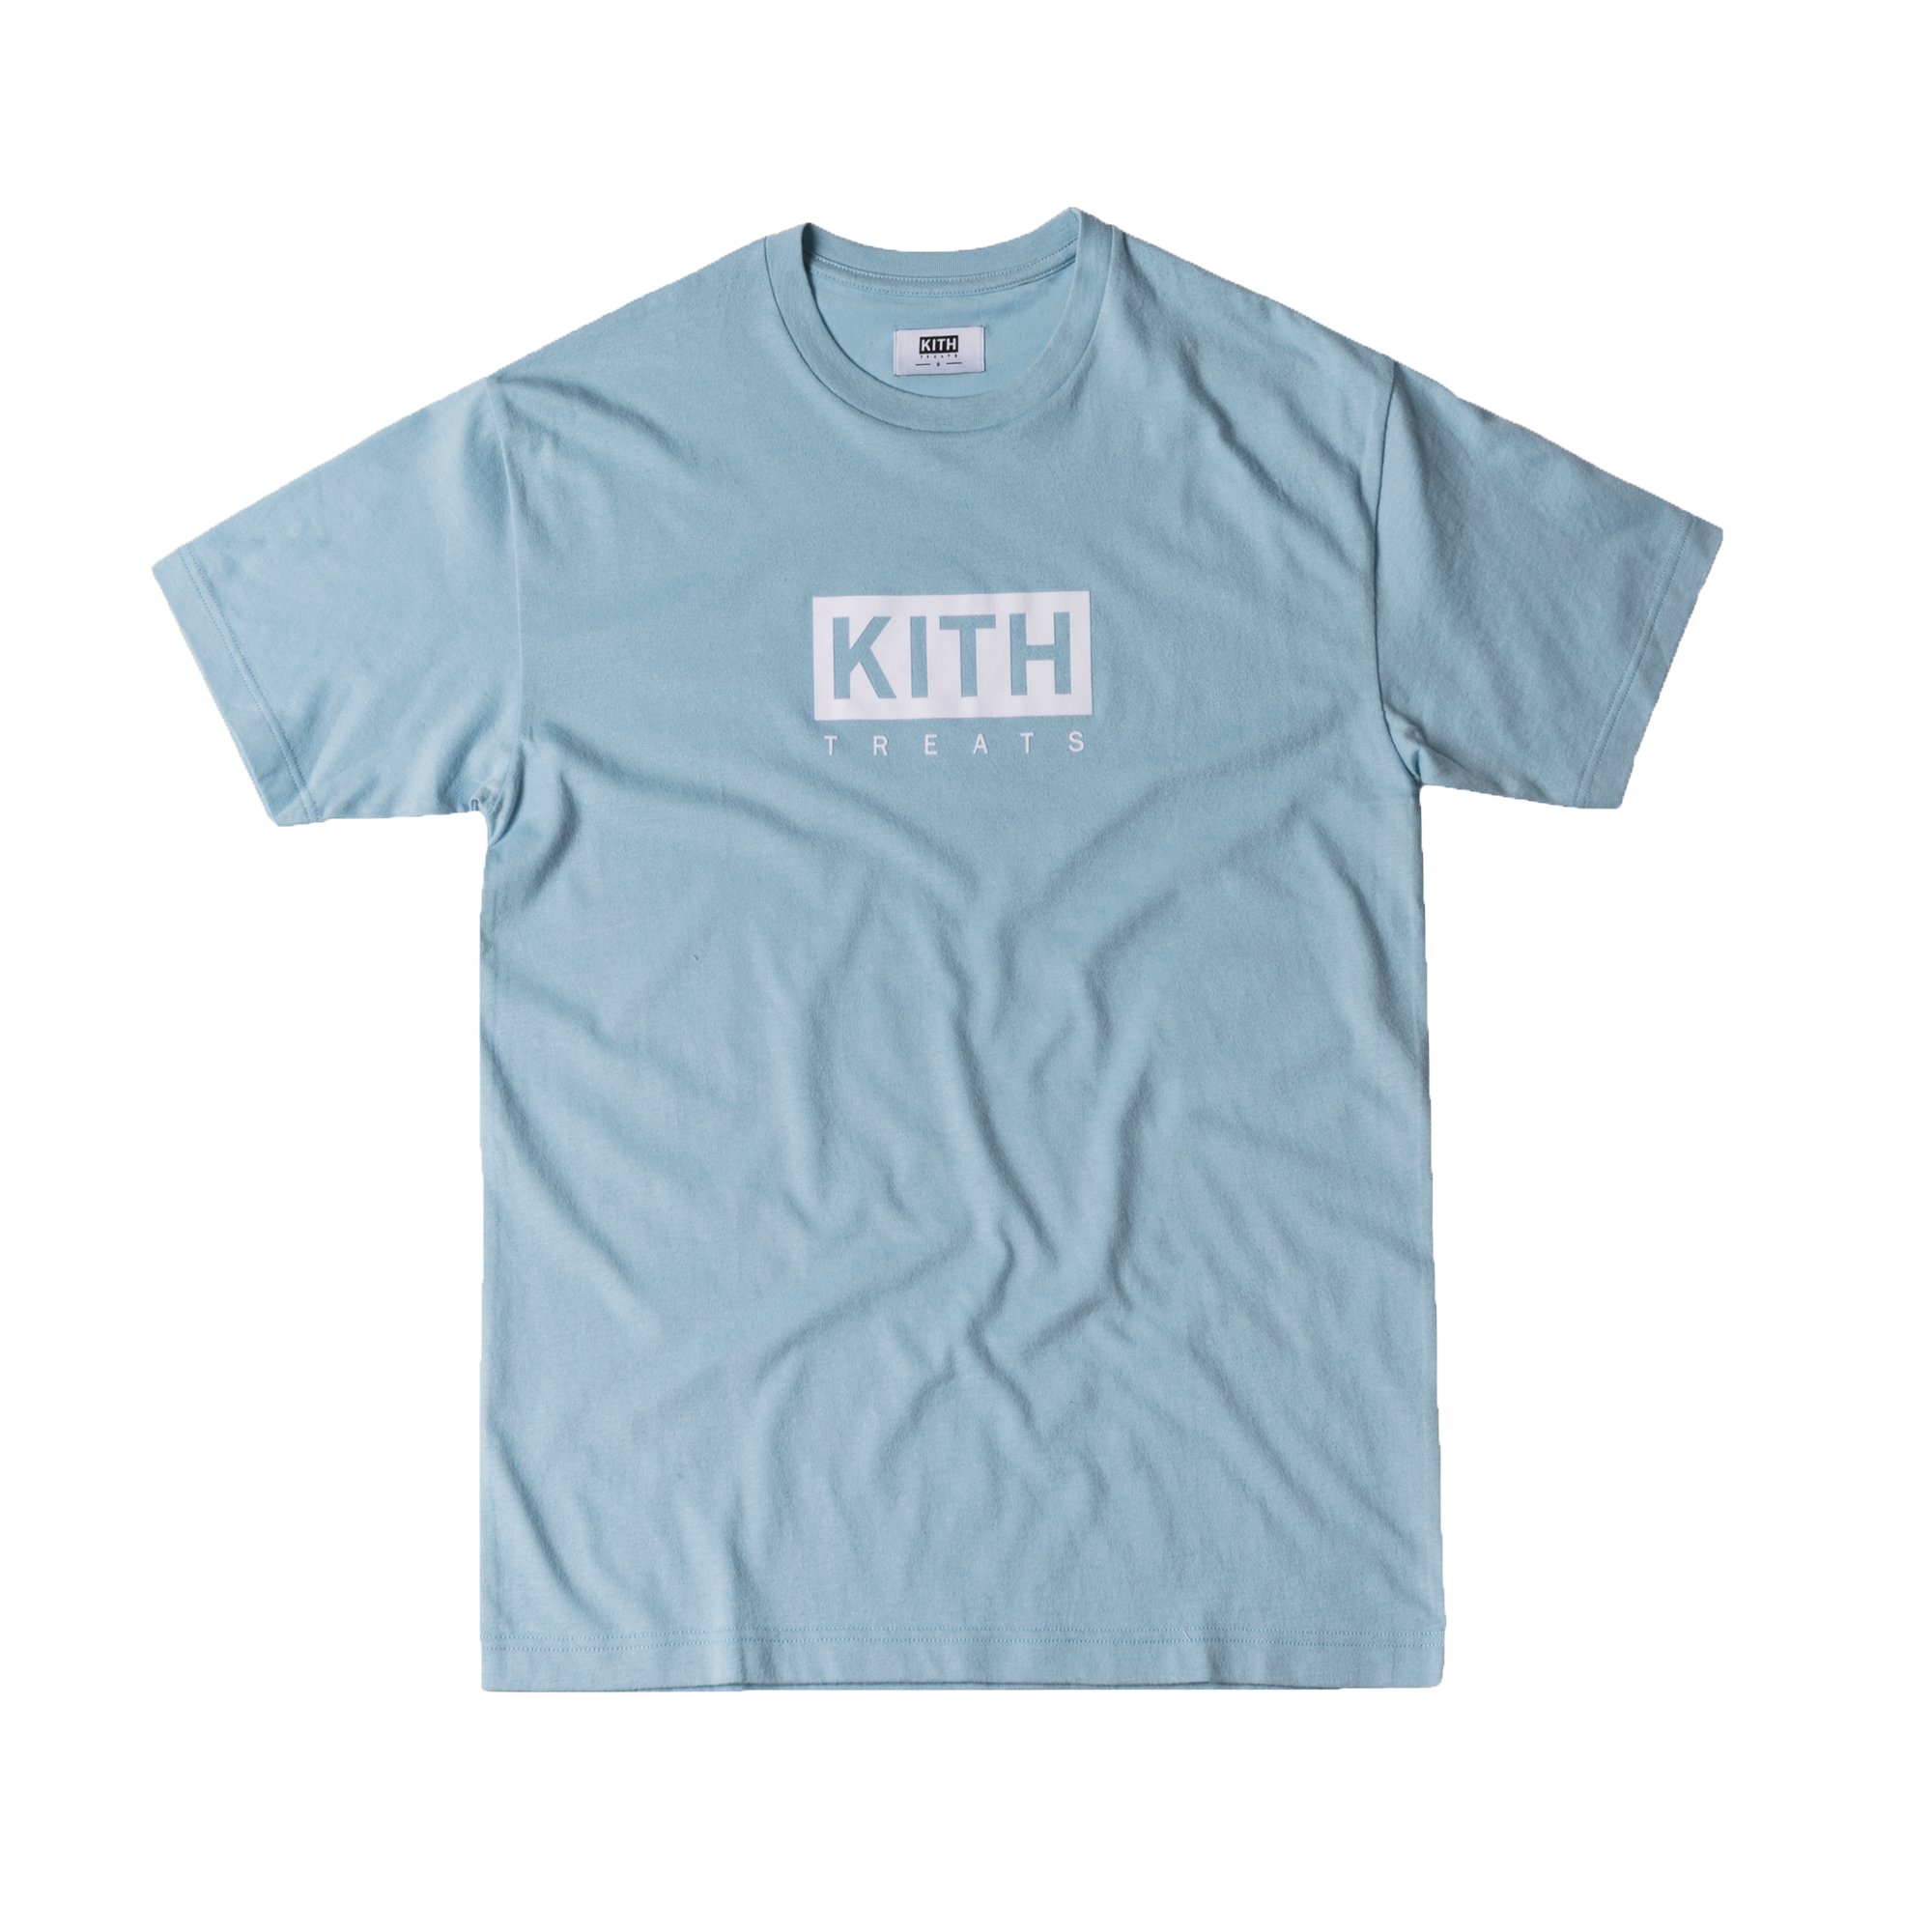 Kith Treats Tee Light Blue - SS17 Men's - US